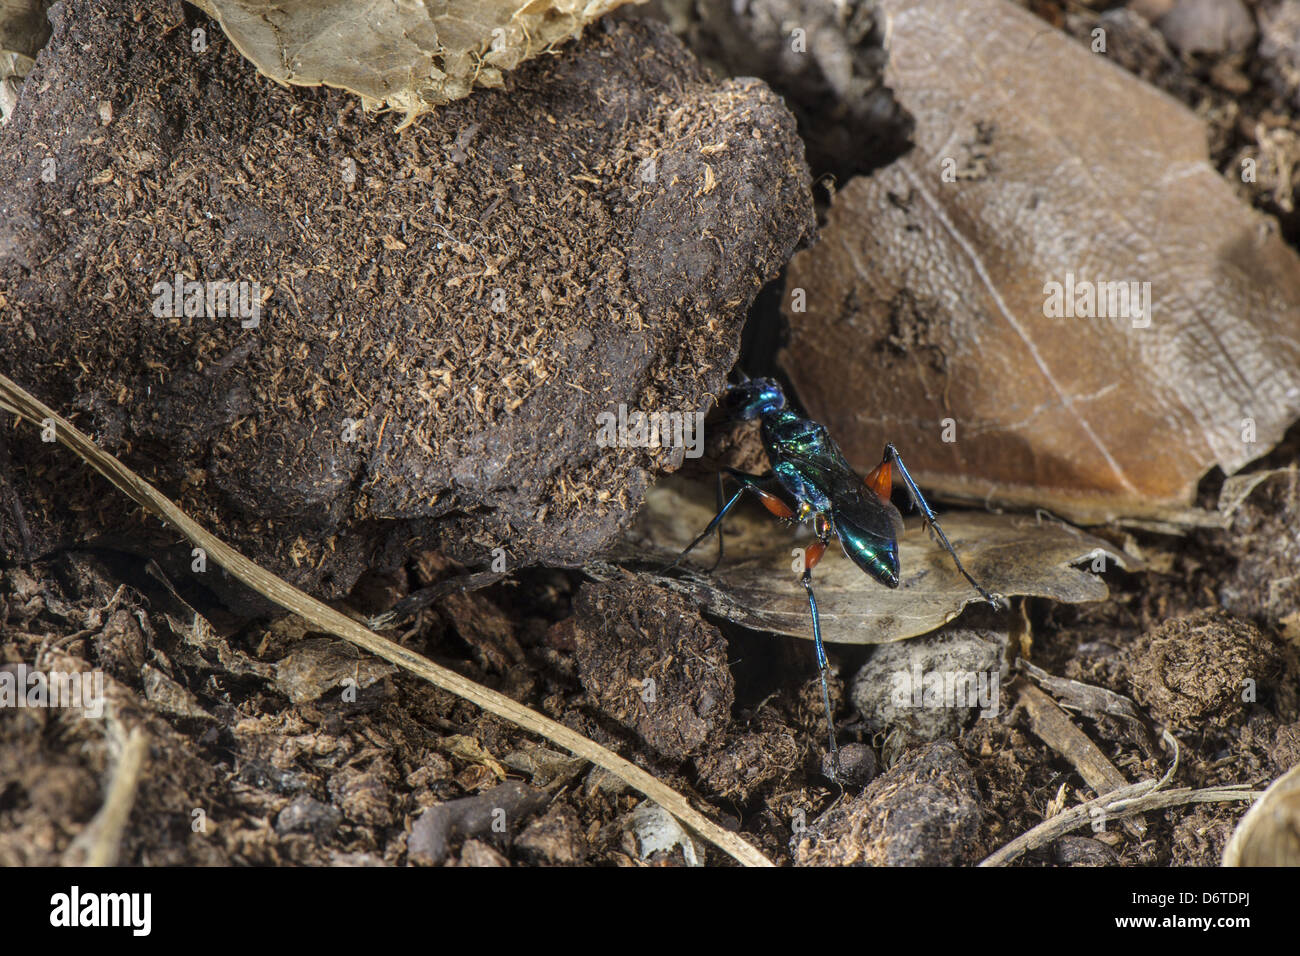 Emerald Cockroach Wasp Ampulex compressa adult female carrying material burrow buried American Cockroach Periplaneta americana Stock Photo